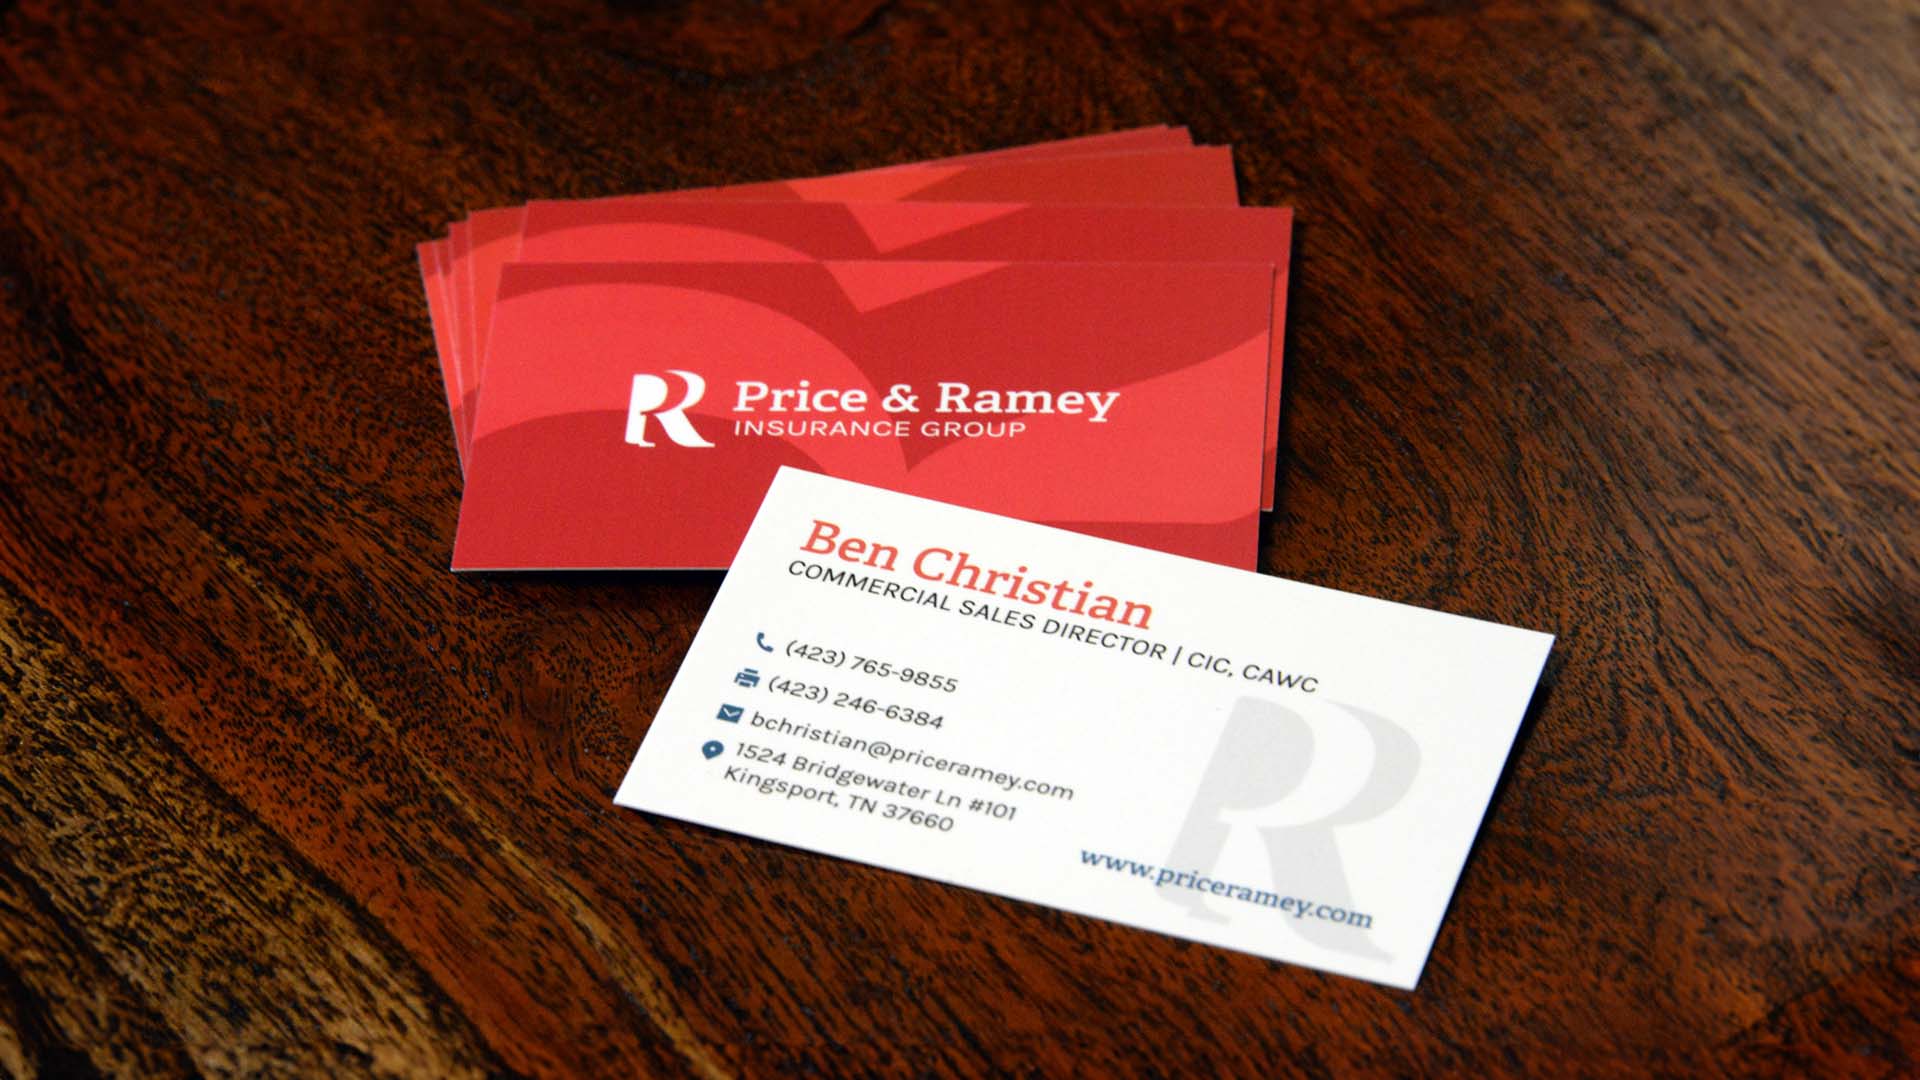 Price & Ramey Business Cards